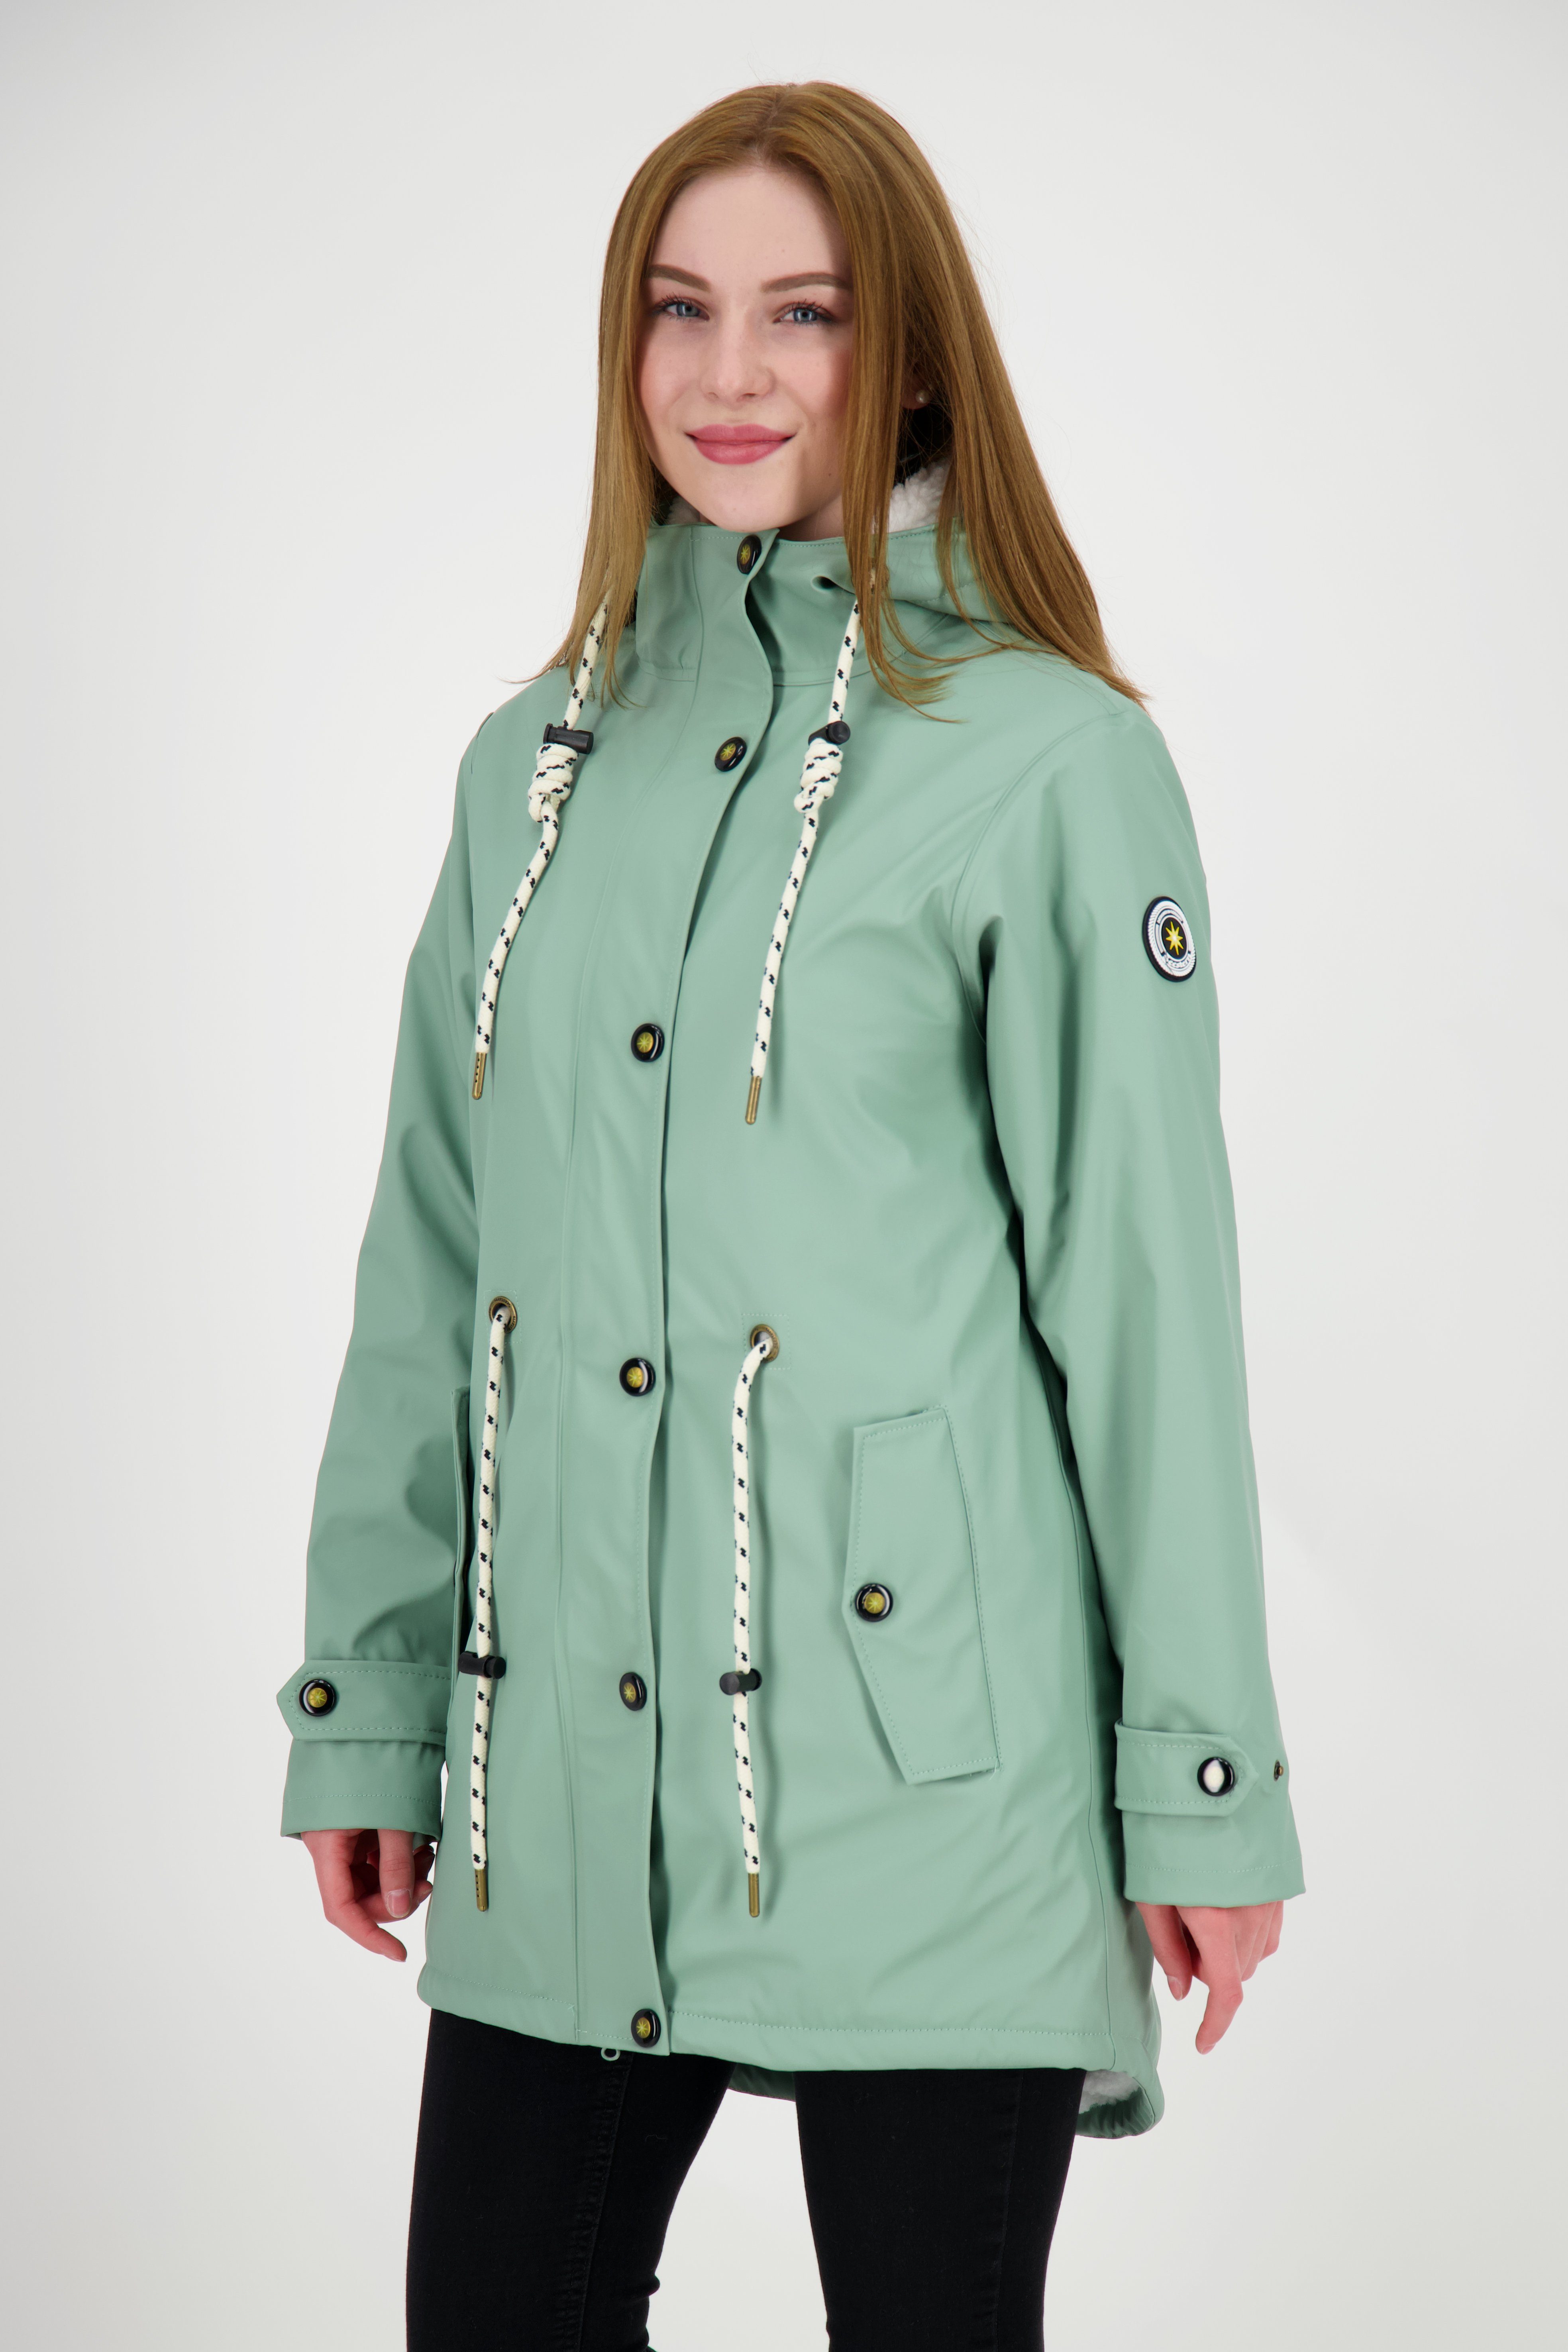 DEPROC Active Regenjacke Regenjacke & Longjacket ANKERGLUT #ankergluttraum  CS NEW WOMEN auch in Großen Größen erhältlich